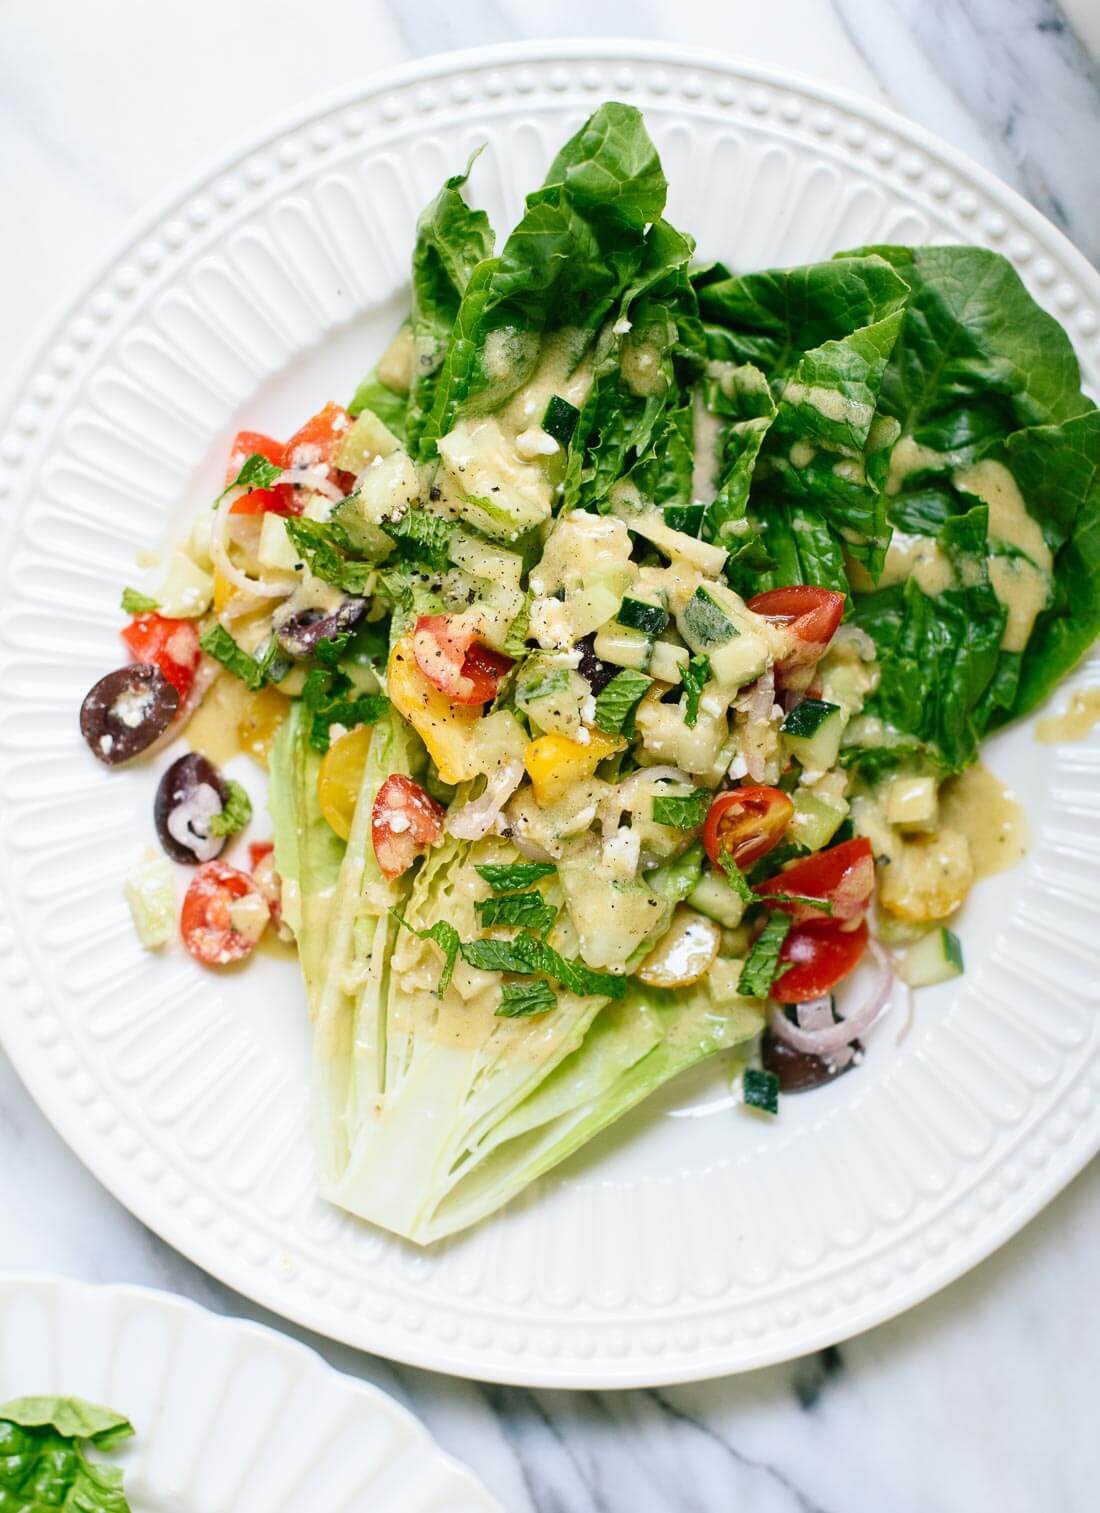 Kc - Salad (Romaine, Tomato, Lemon, Olive Oil)